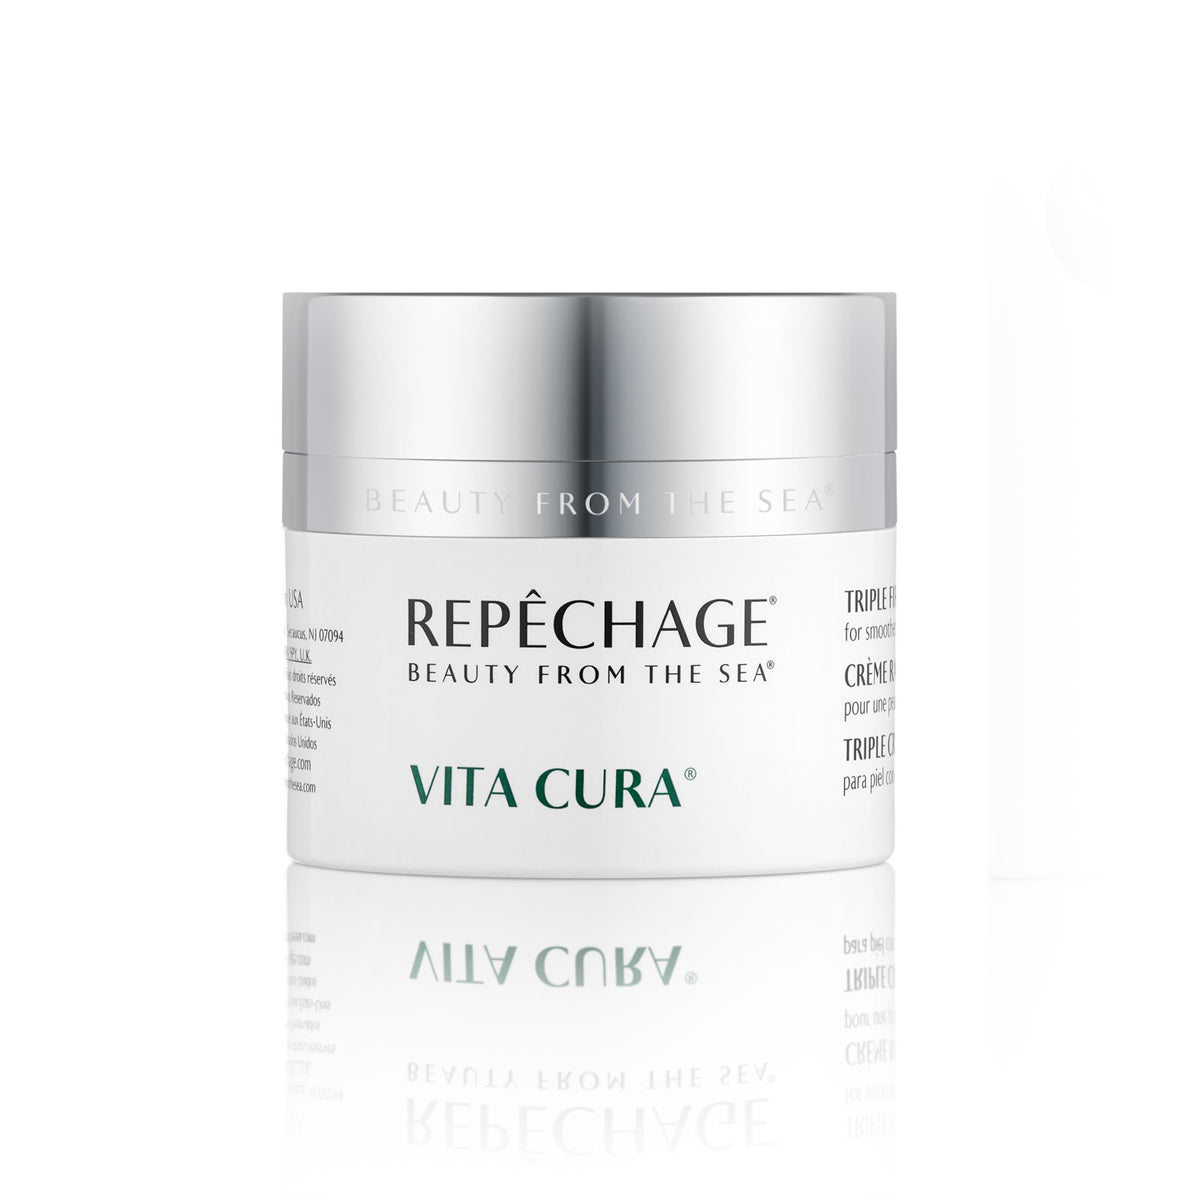 Vita Cura® Triple Firming Cream (1.7 fl oz) jar